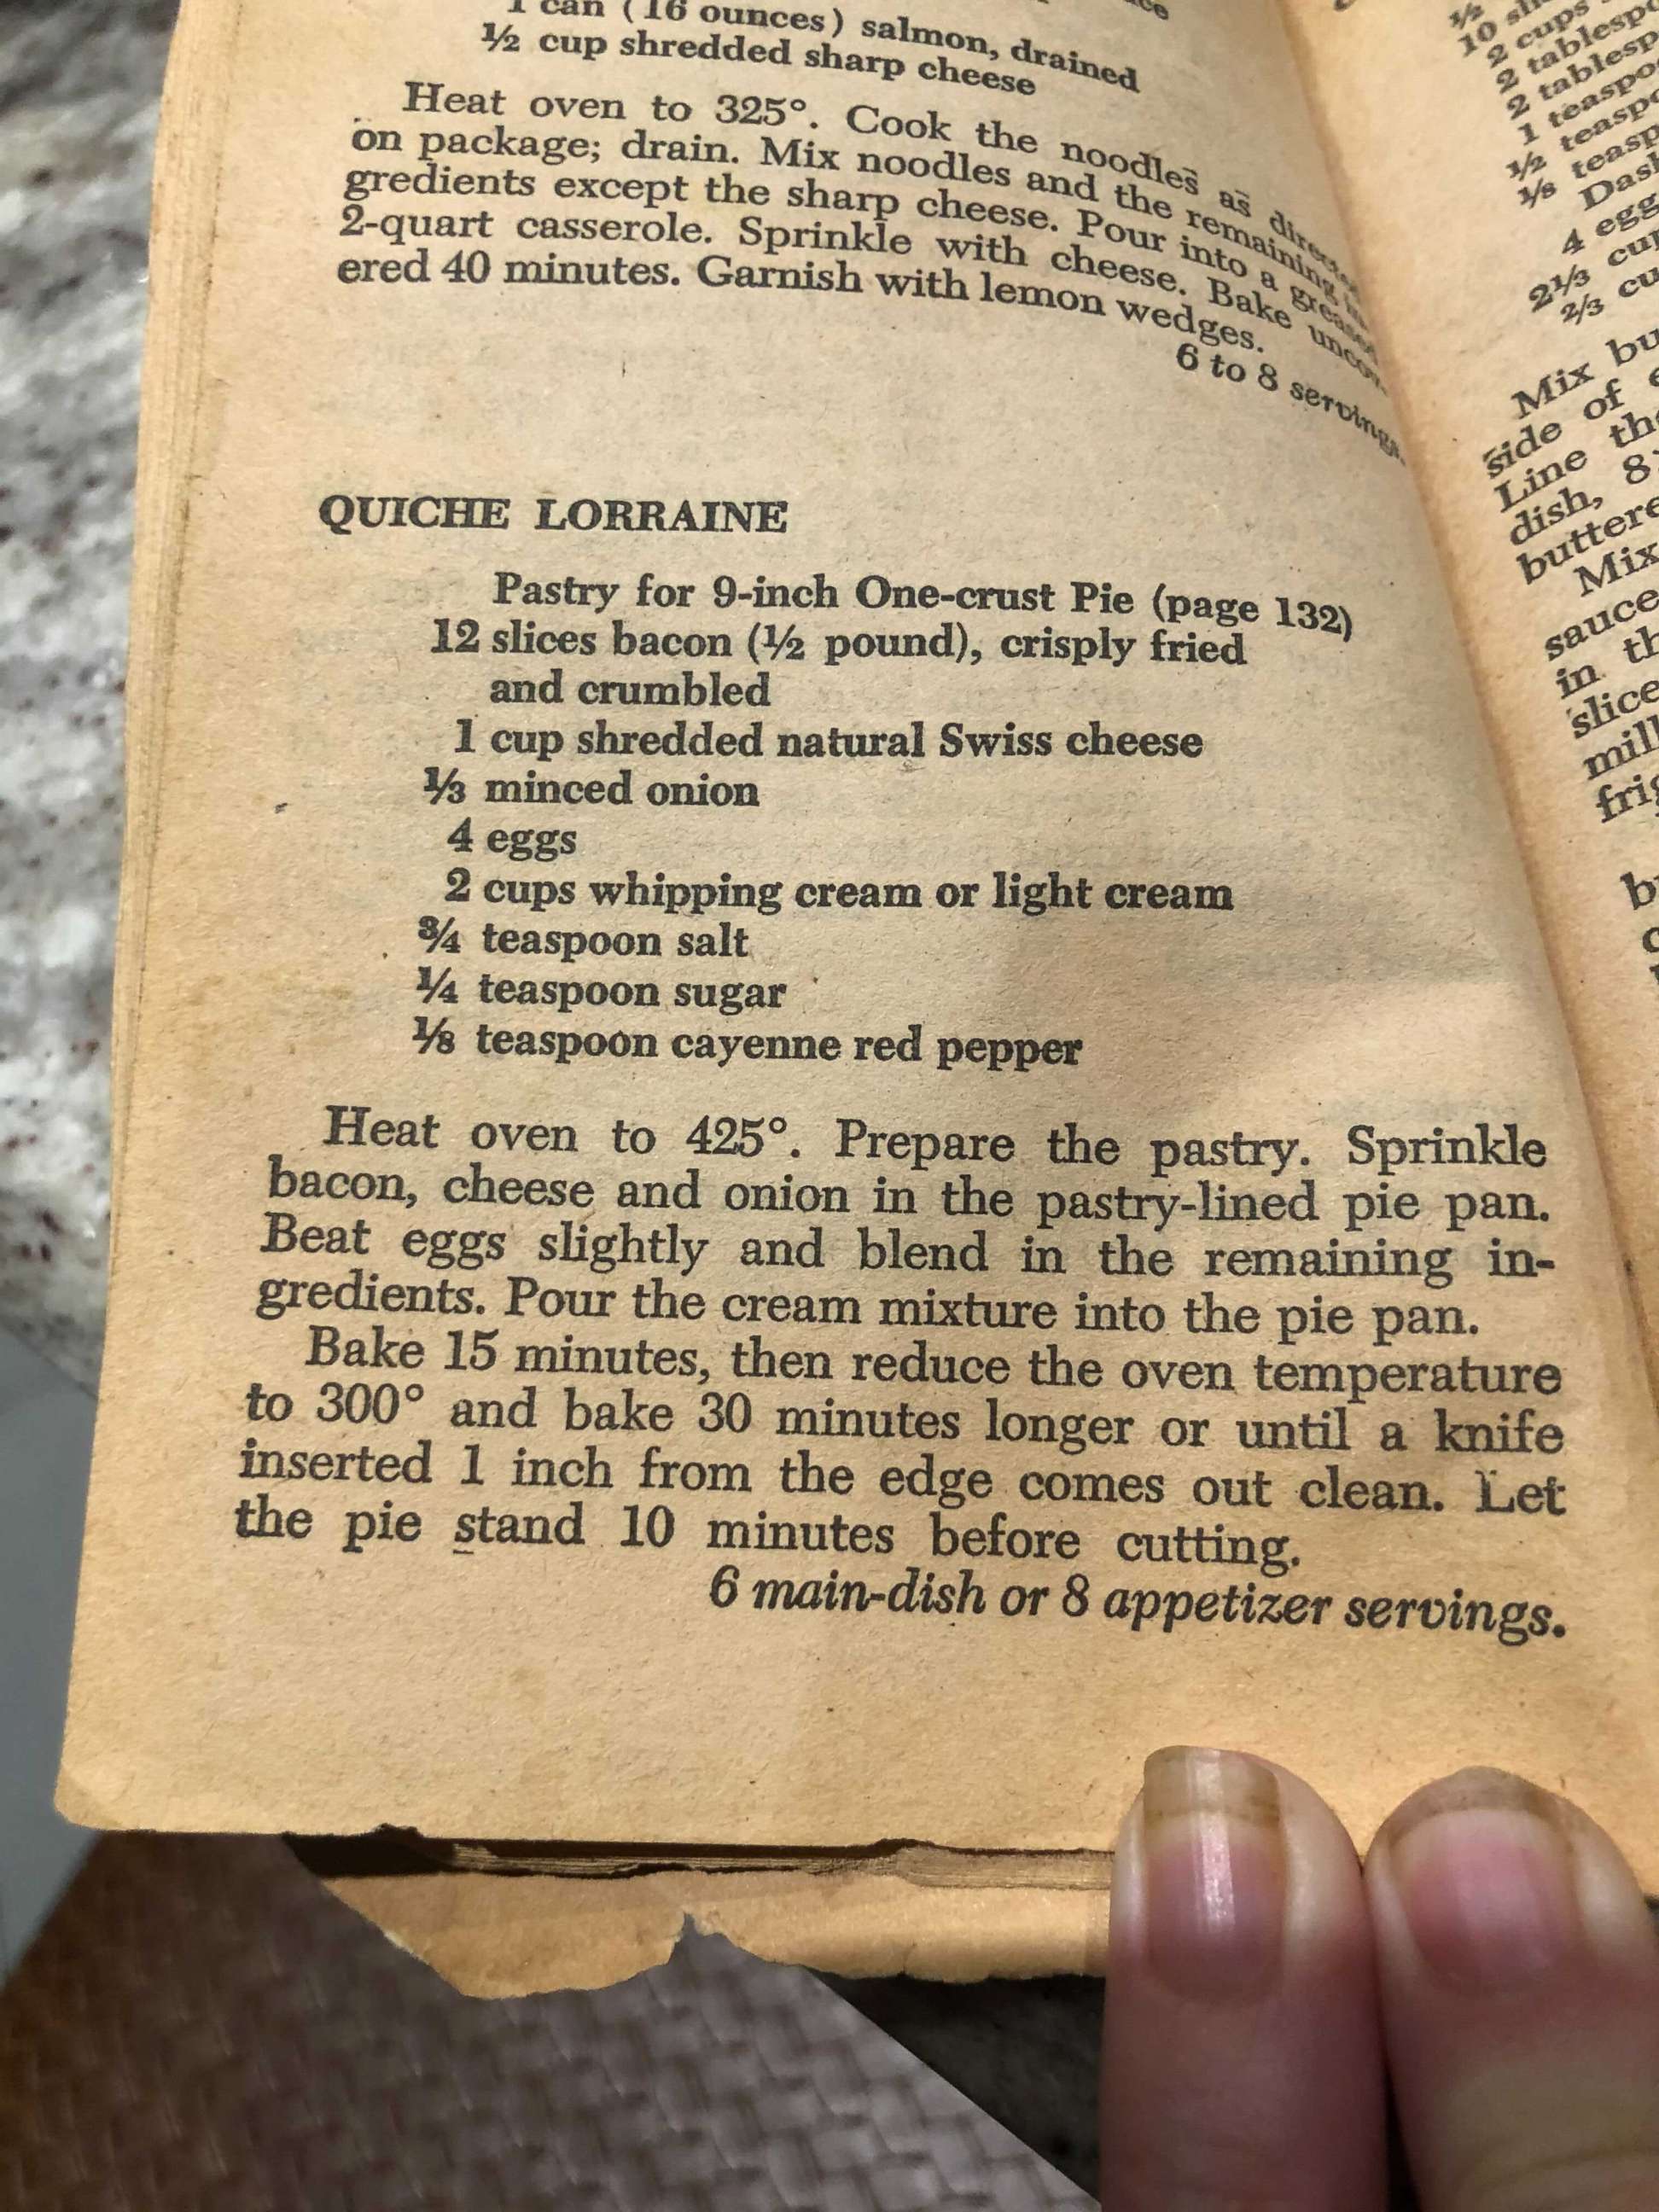 PHOTO: The original Quiche Lorraine recipe from a Betty Crocker cookbook.